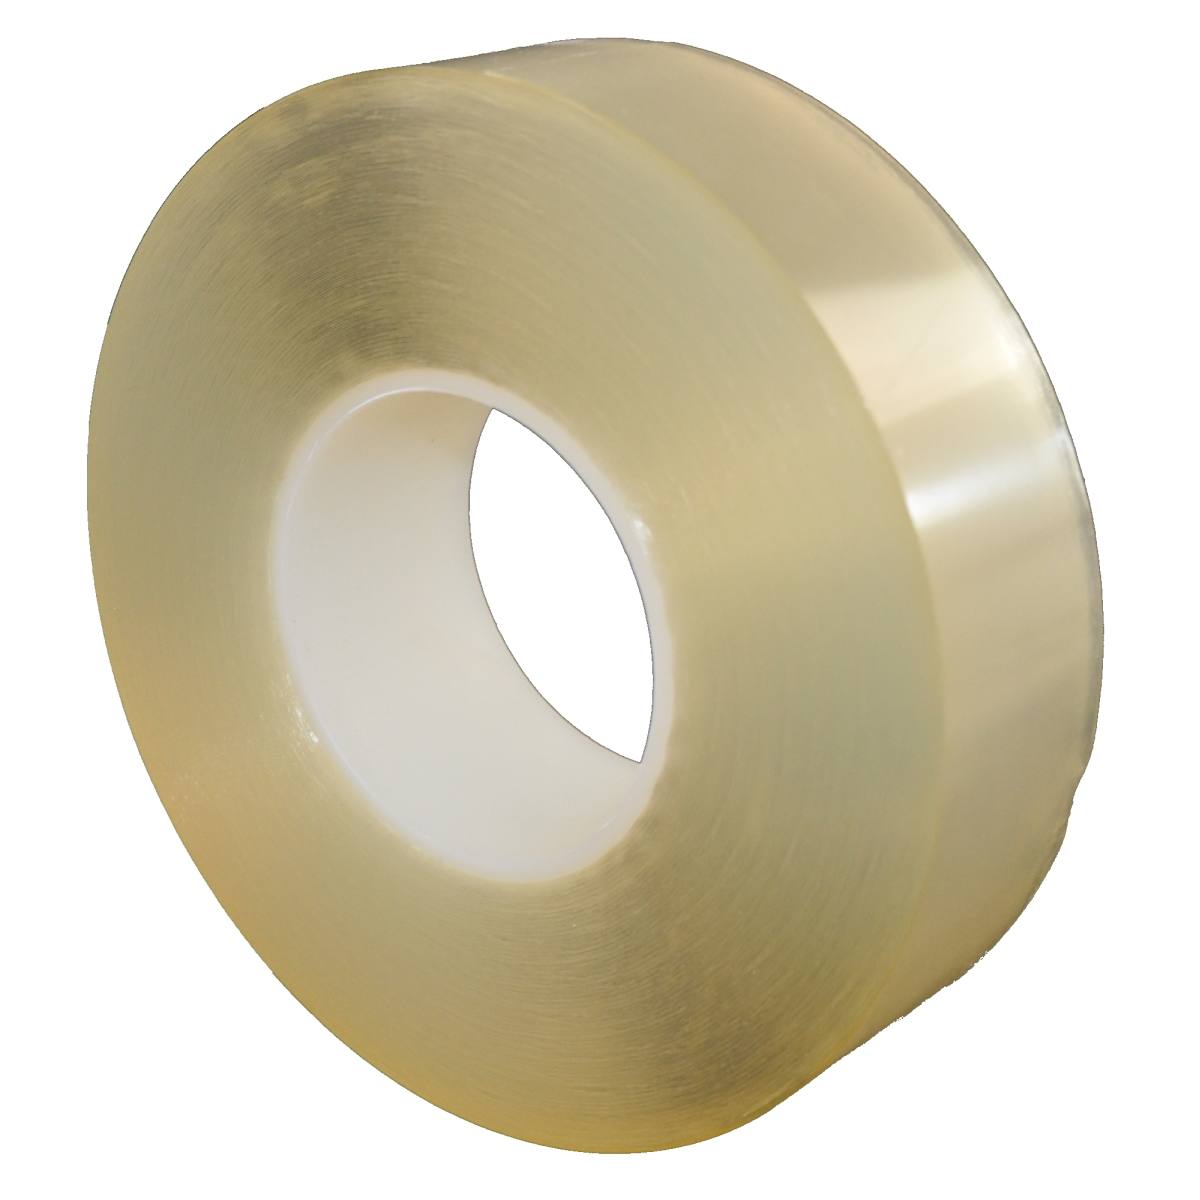 S-K-S transfer adhesive tape 2283 LE20, transparent, 12 mm x 50 m, 0.30 mm